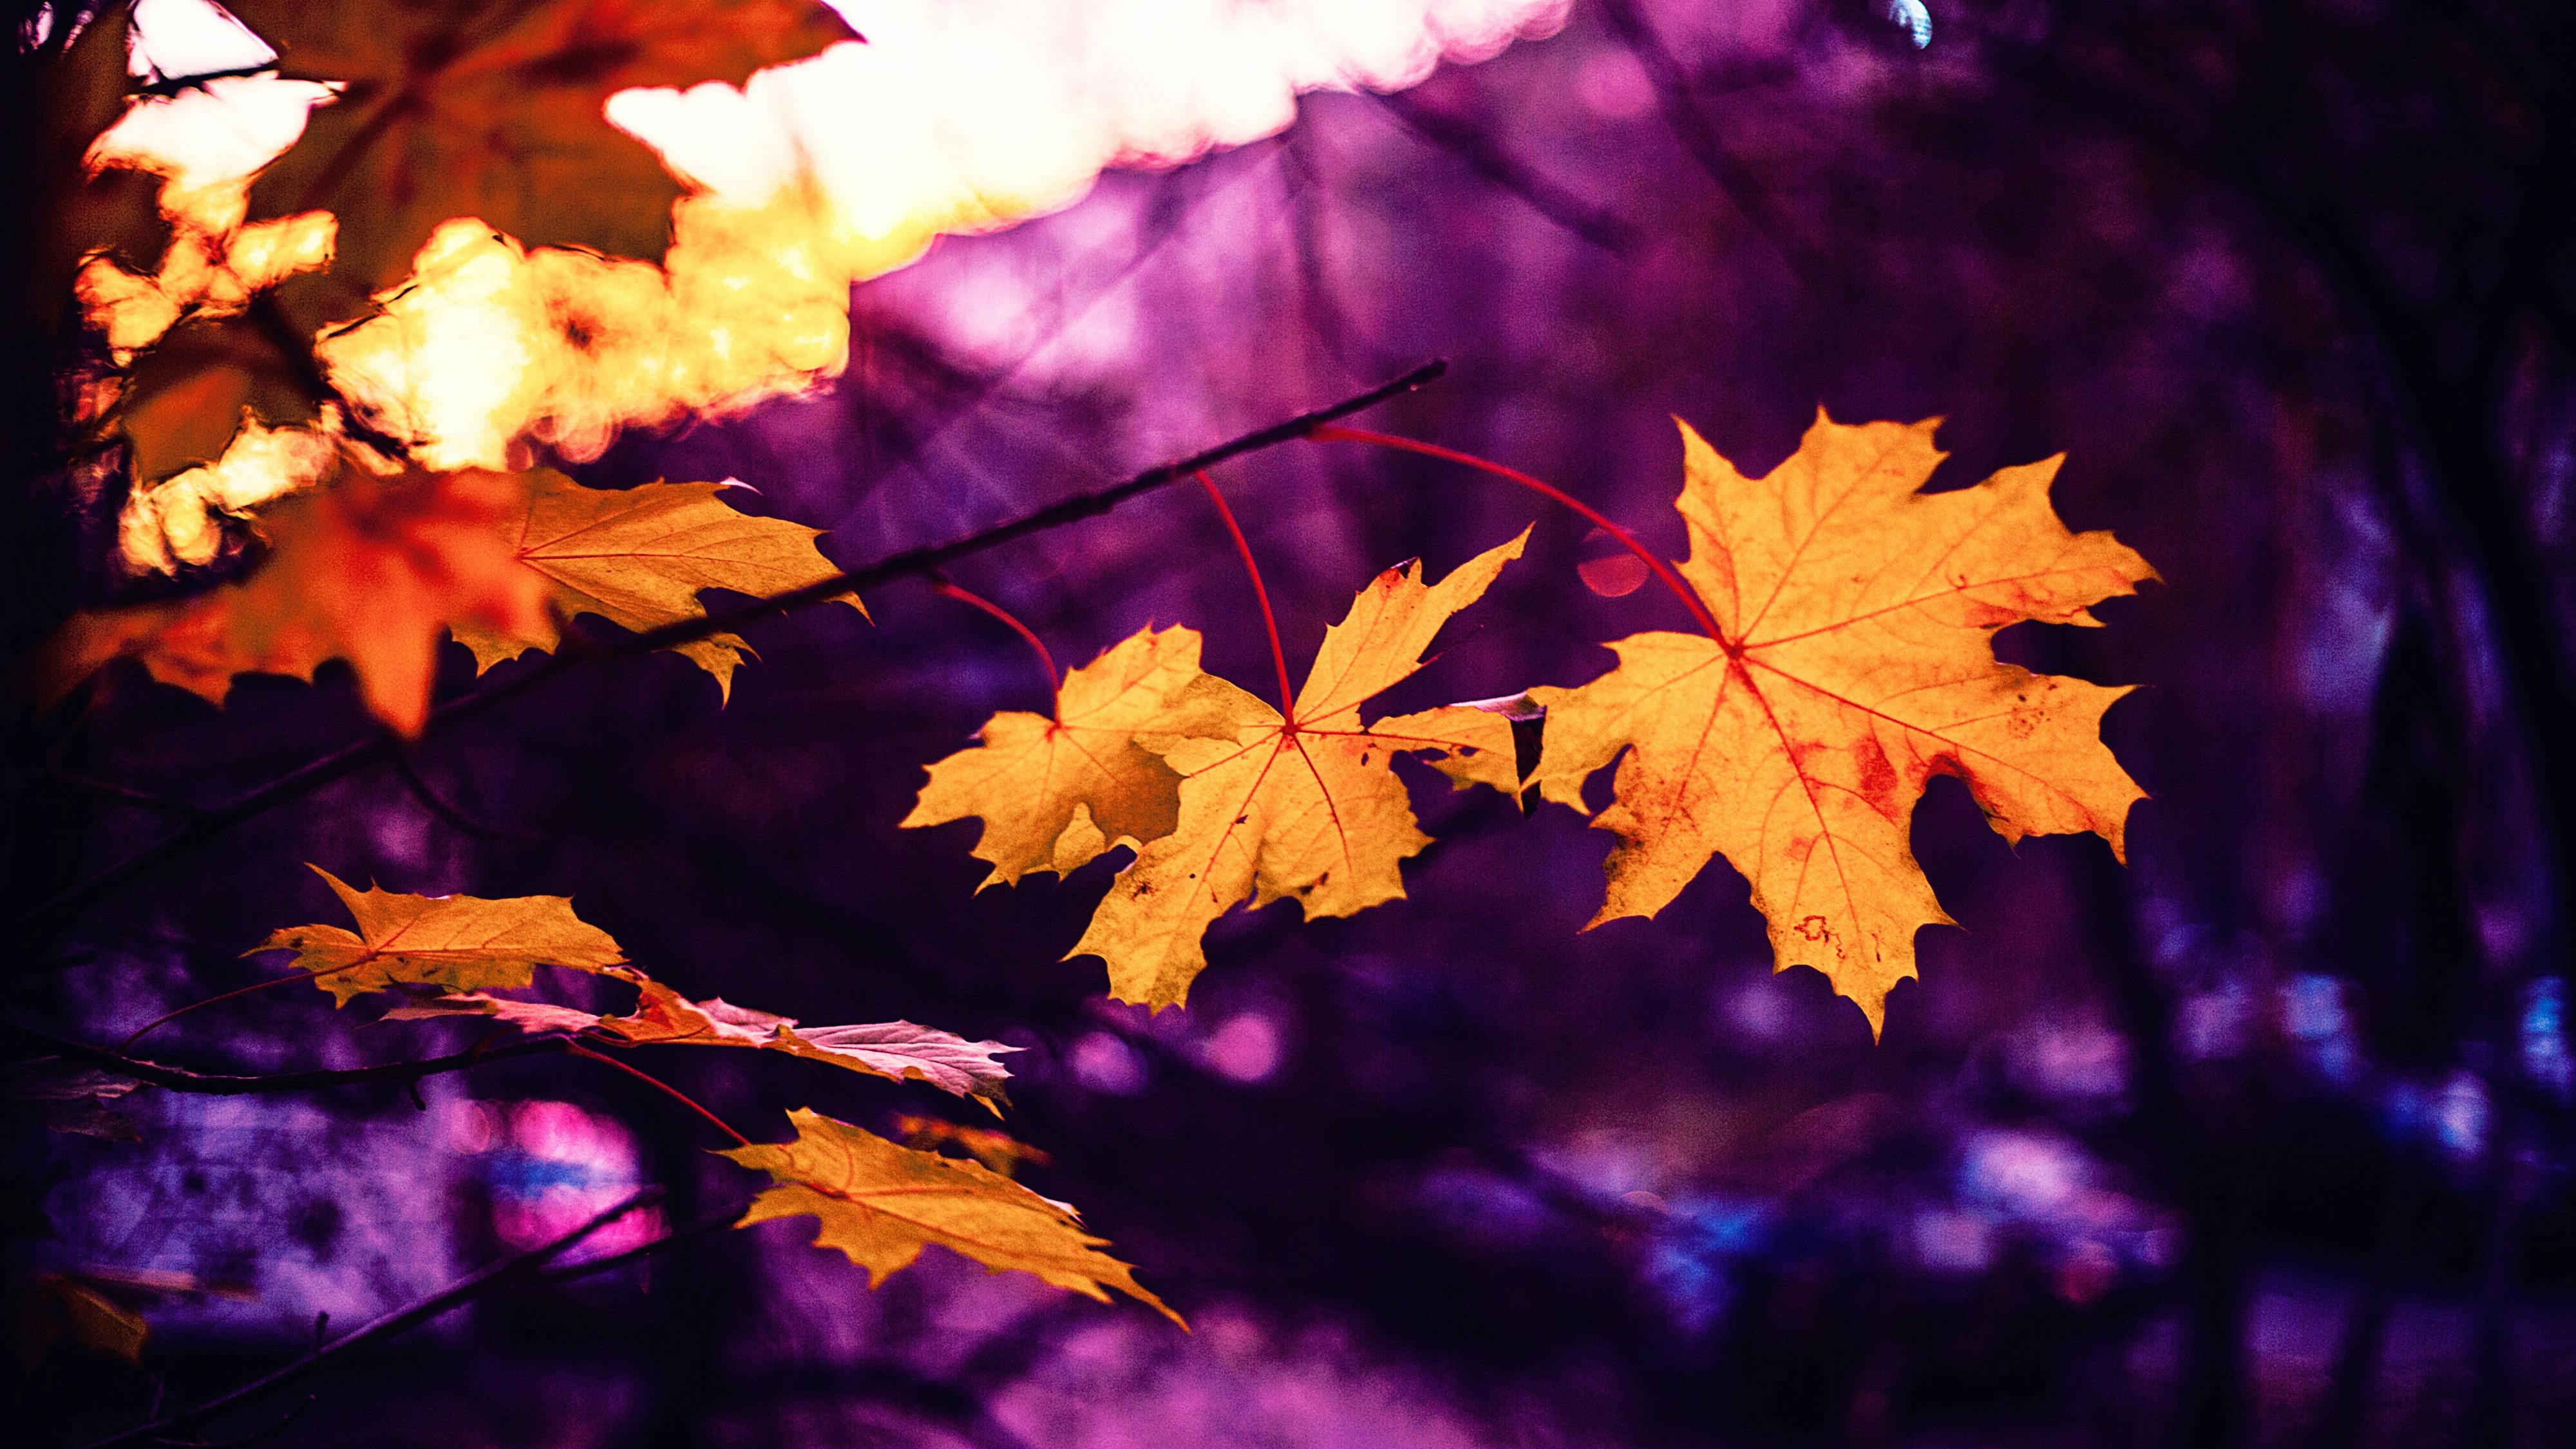 Free stock photo of autumn, autumn leaf, autumn leaves